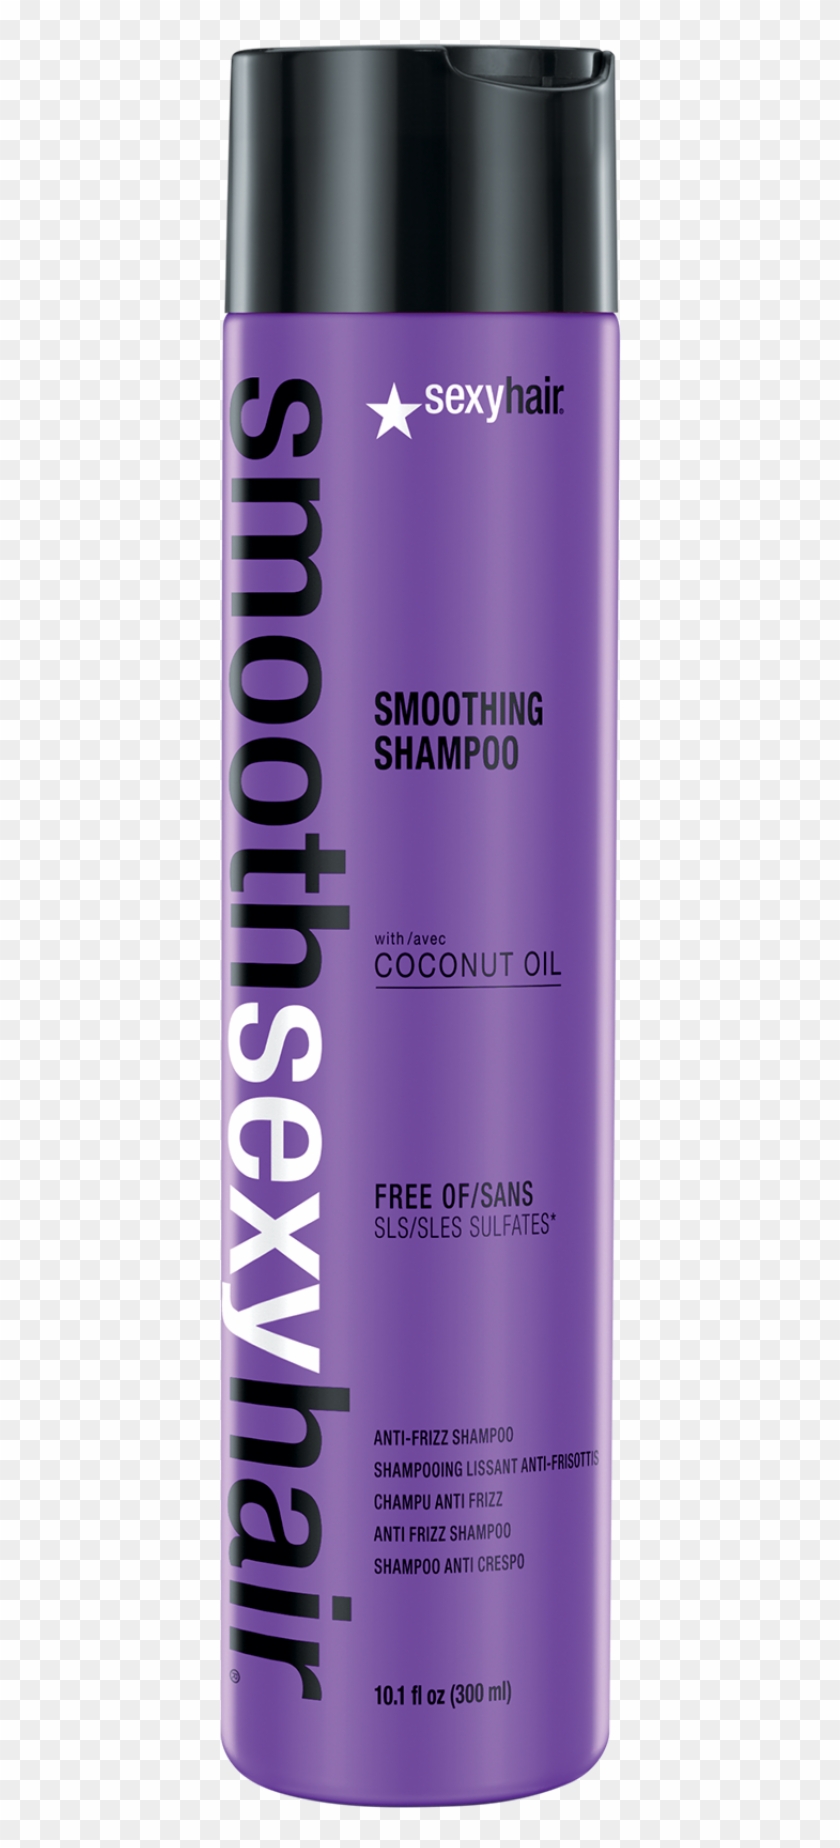 Smooth Sexy Hair - Sexy Hair Smooth Shampoo Clipart #4746111